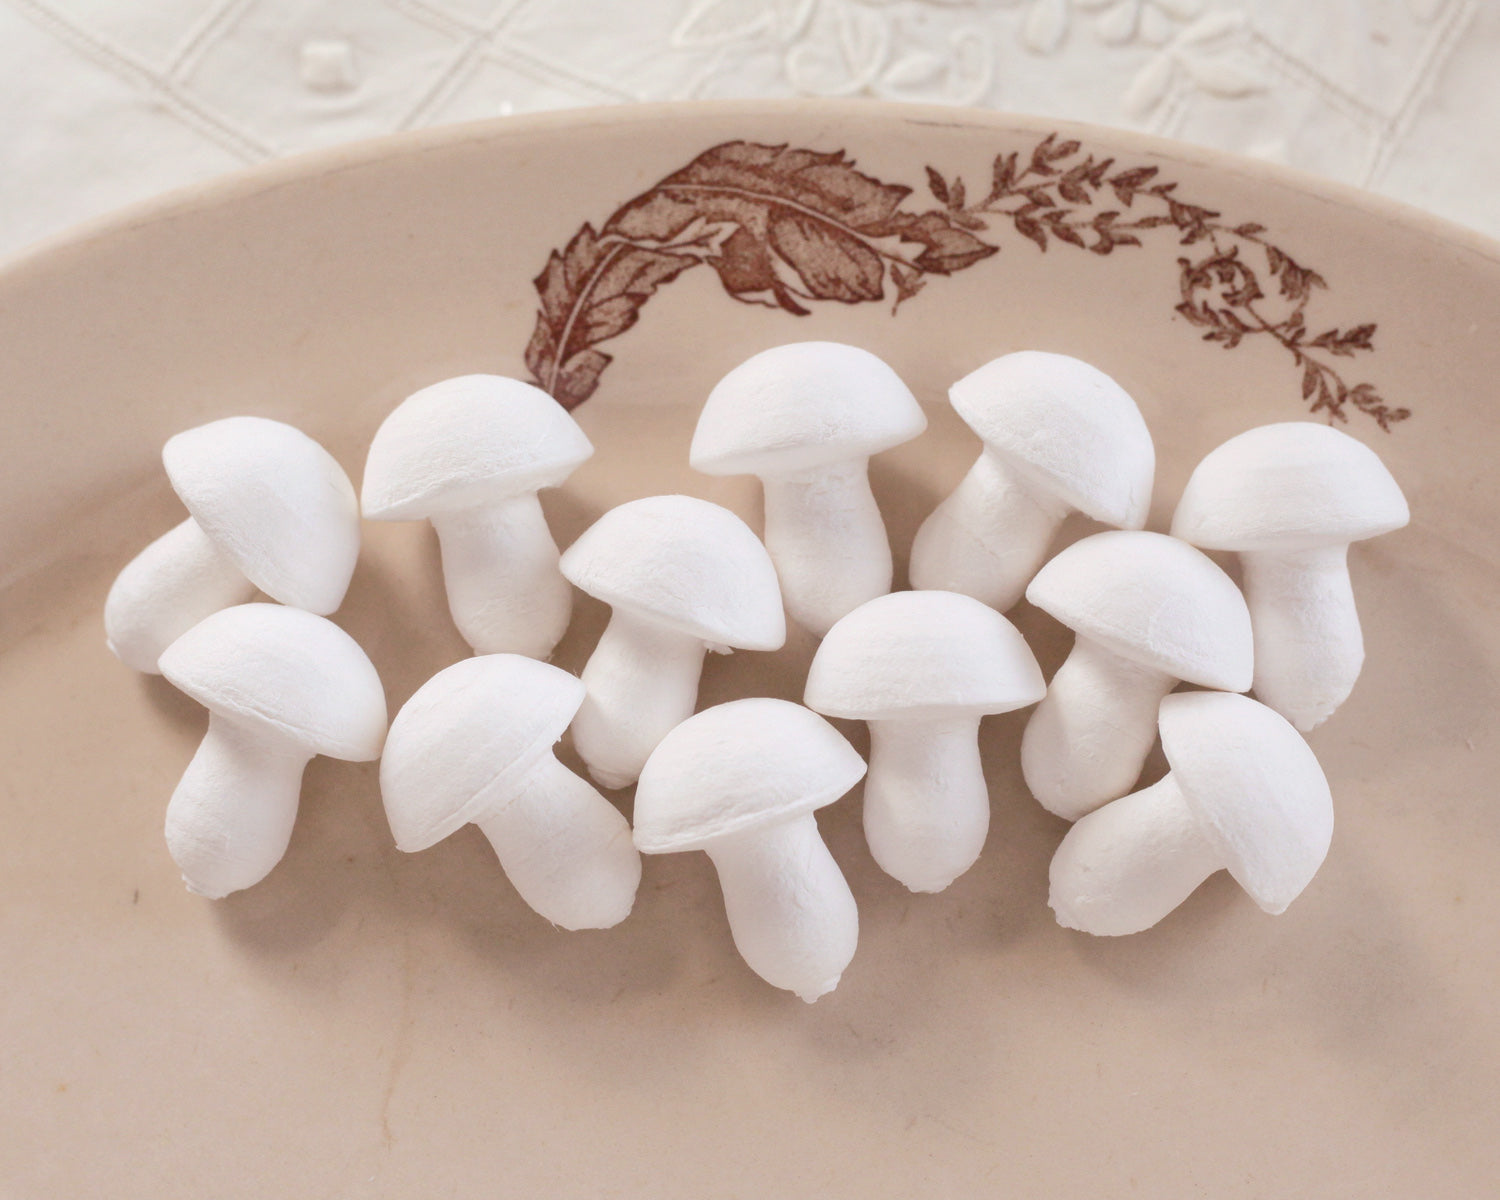 Medium Button Mushrooms - 35 x 28mm Spun Cotton Craft Shapes, 12 Pcs.